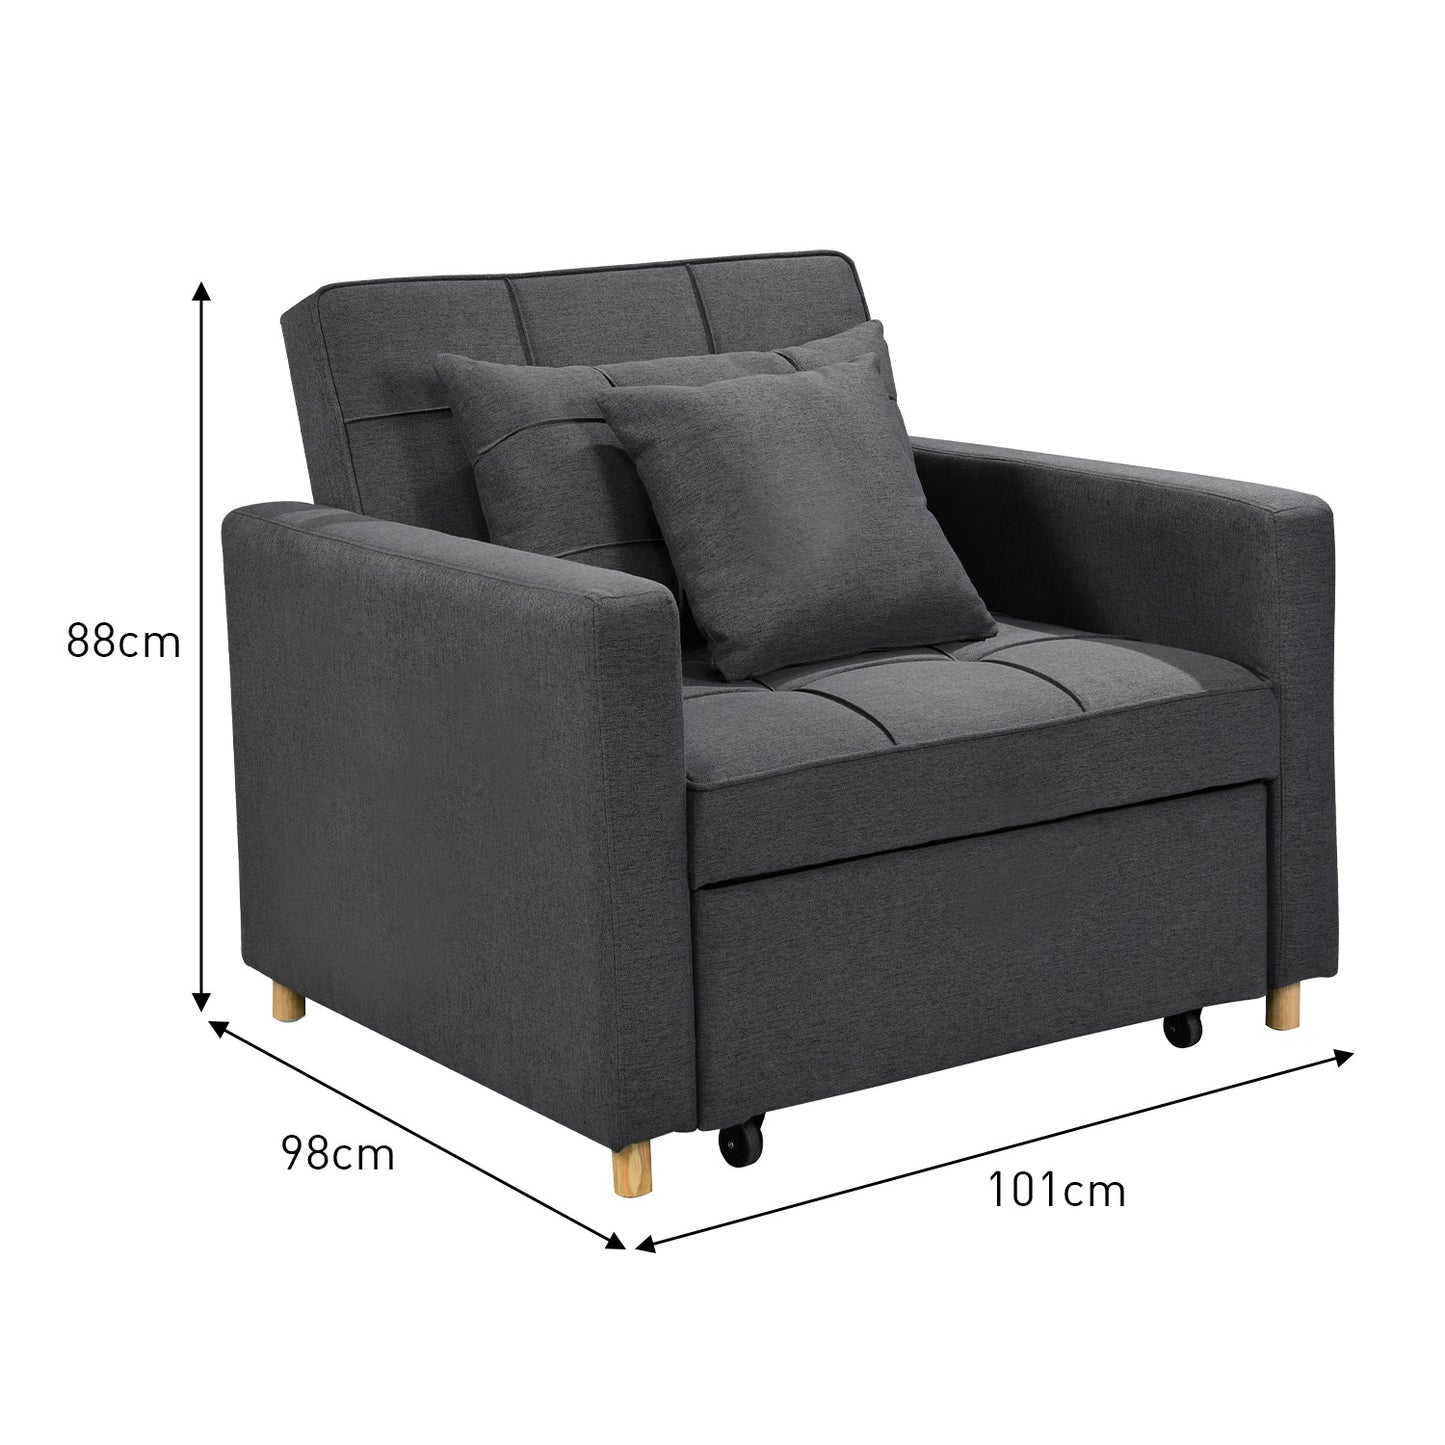 Suri 3-in-1 Convertible Lounge Chair Bed by Sarantino - Dark Grey